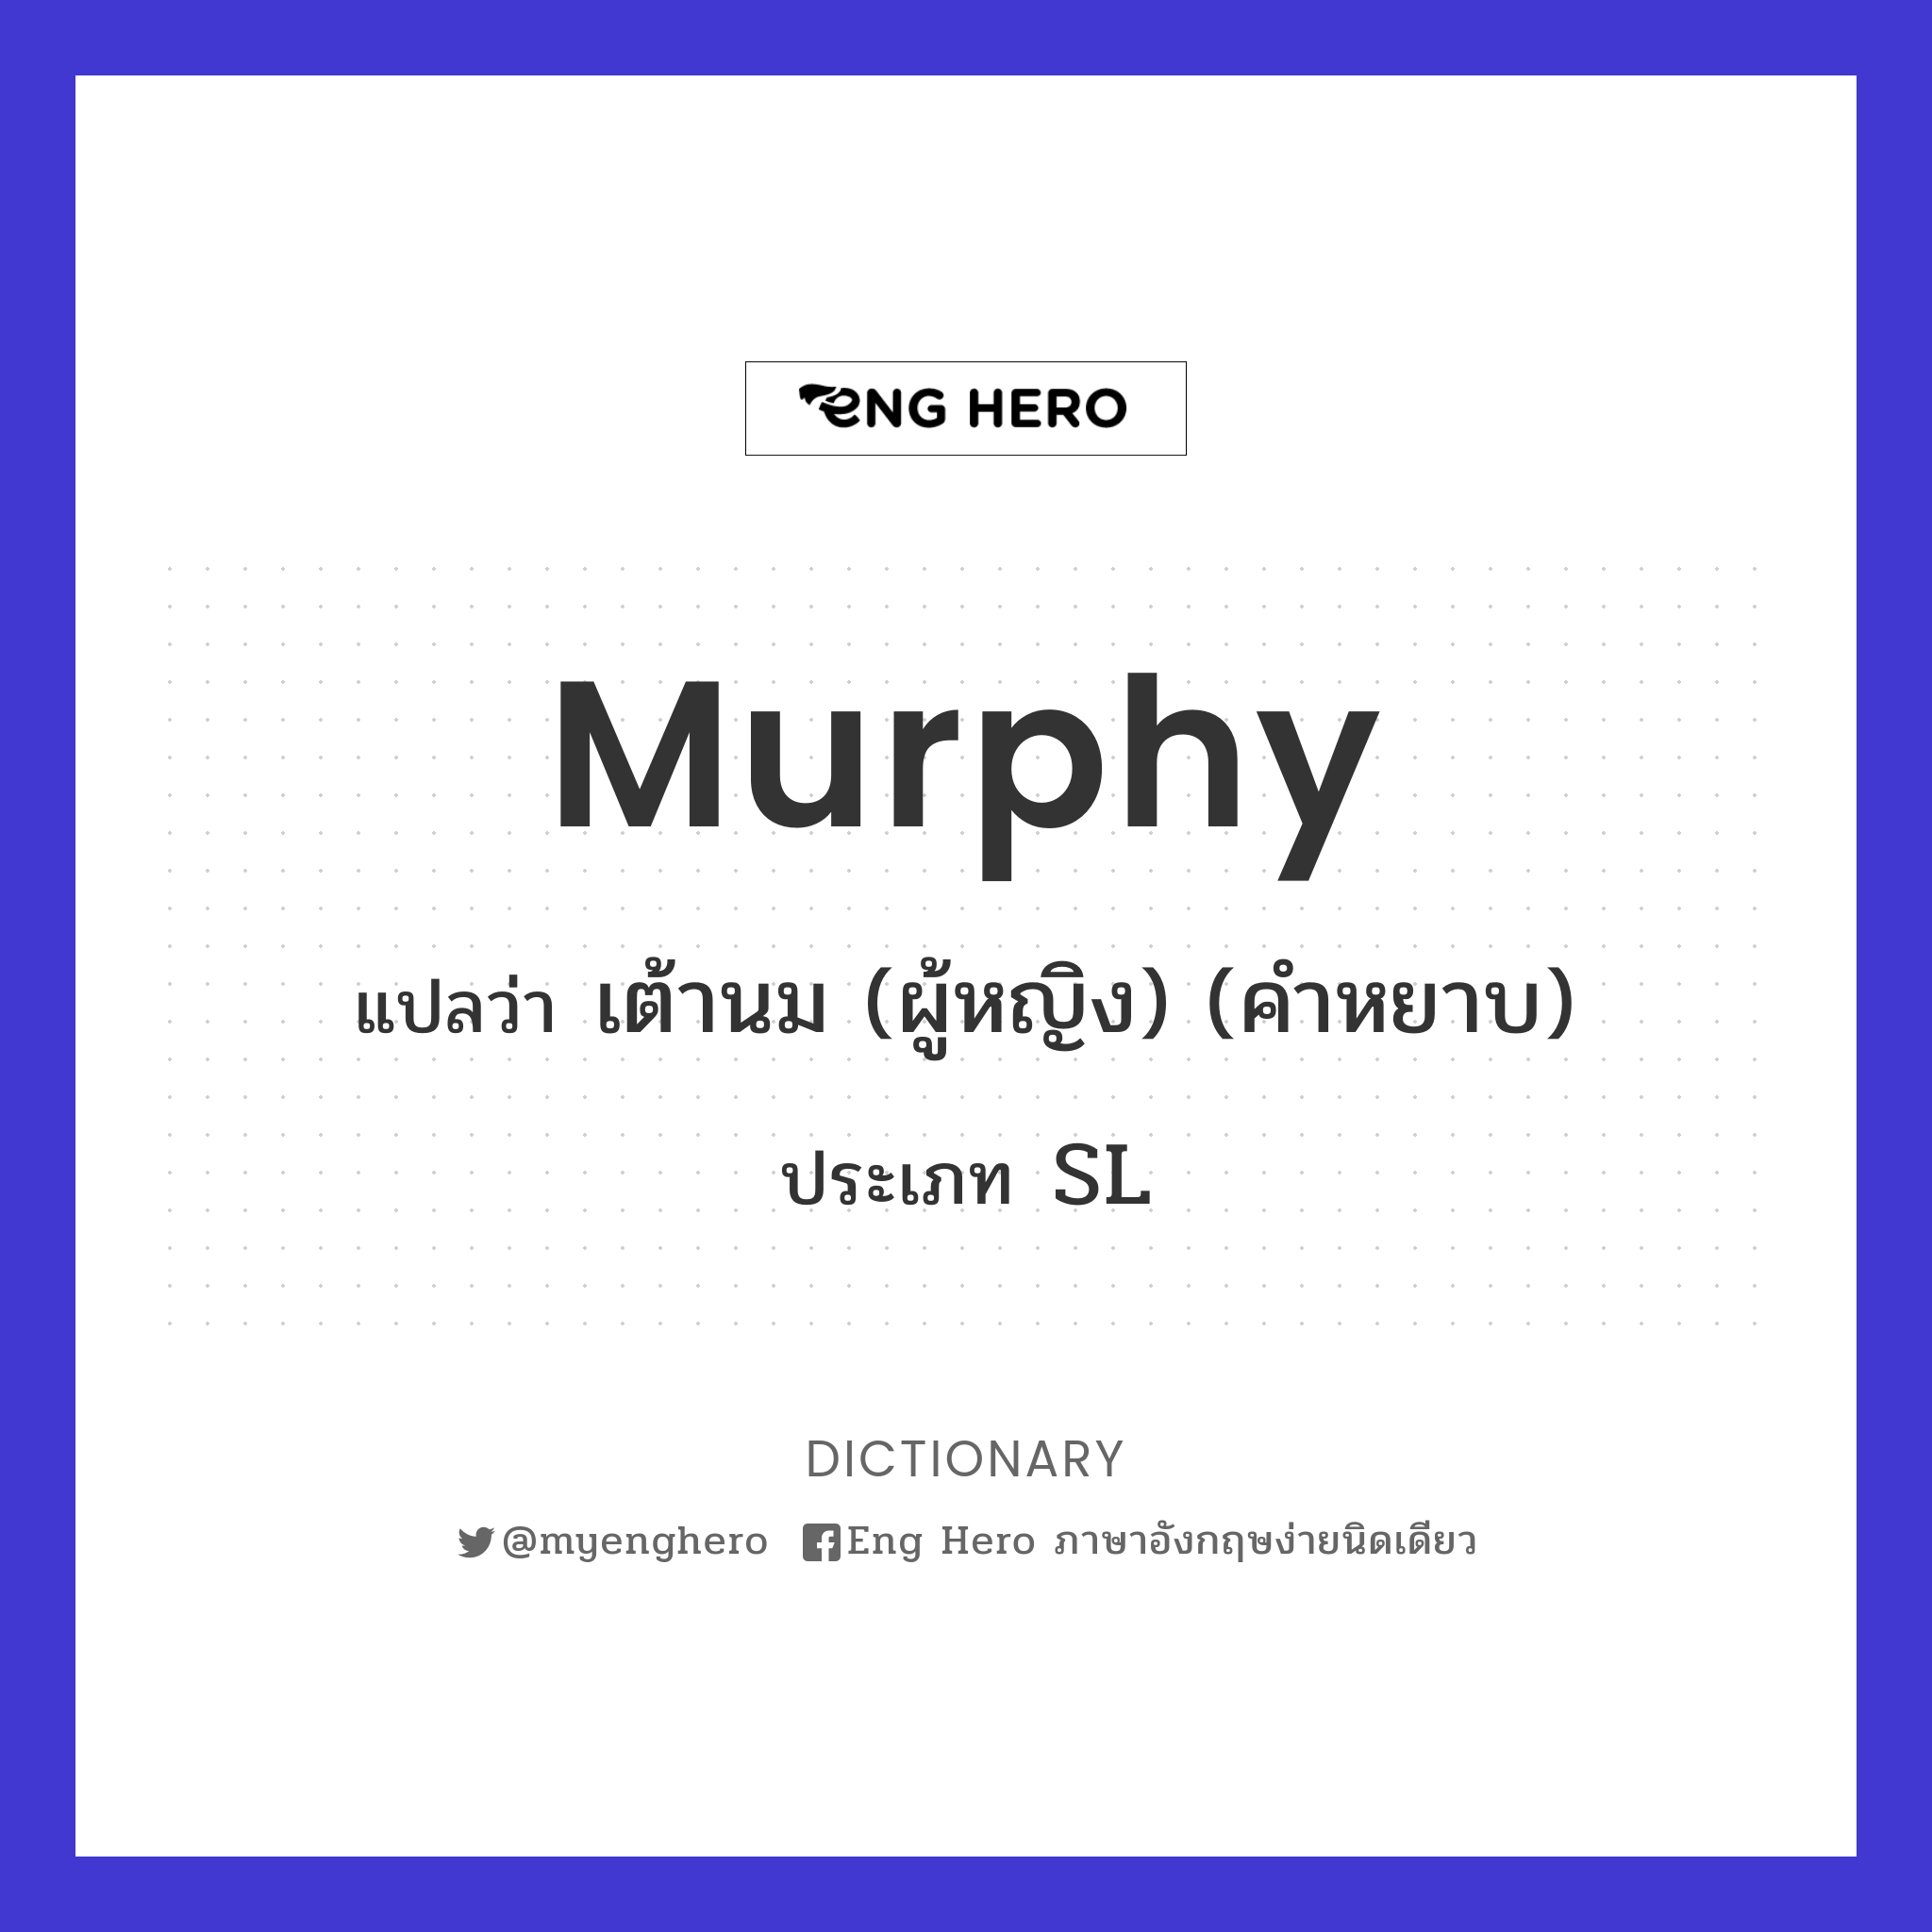 murphy